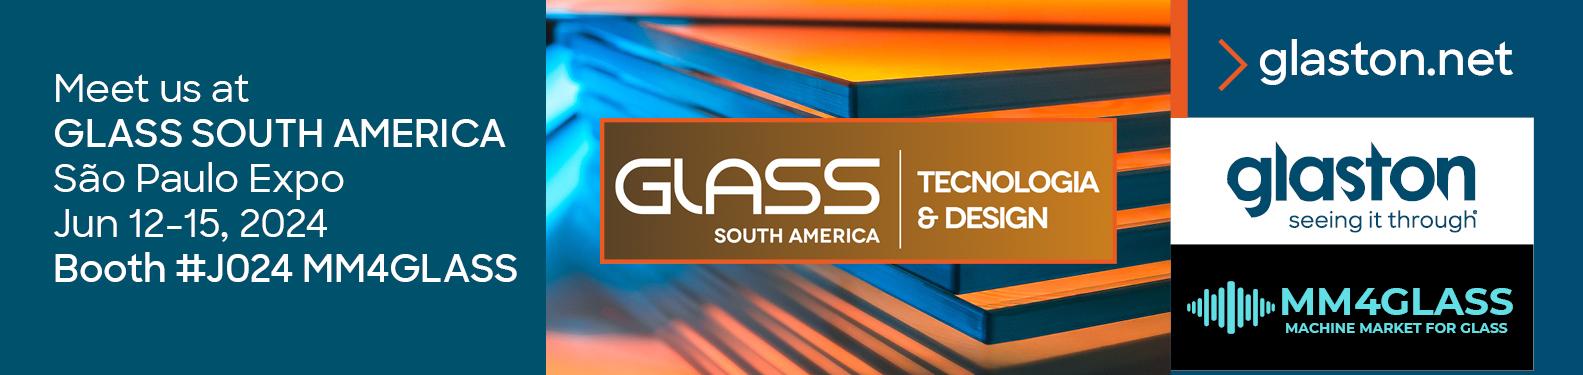 Glaston at Glass South America 2024